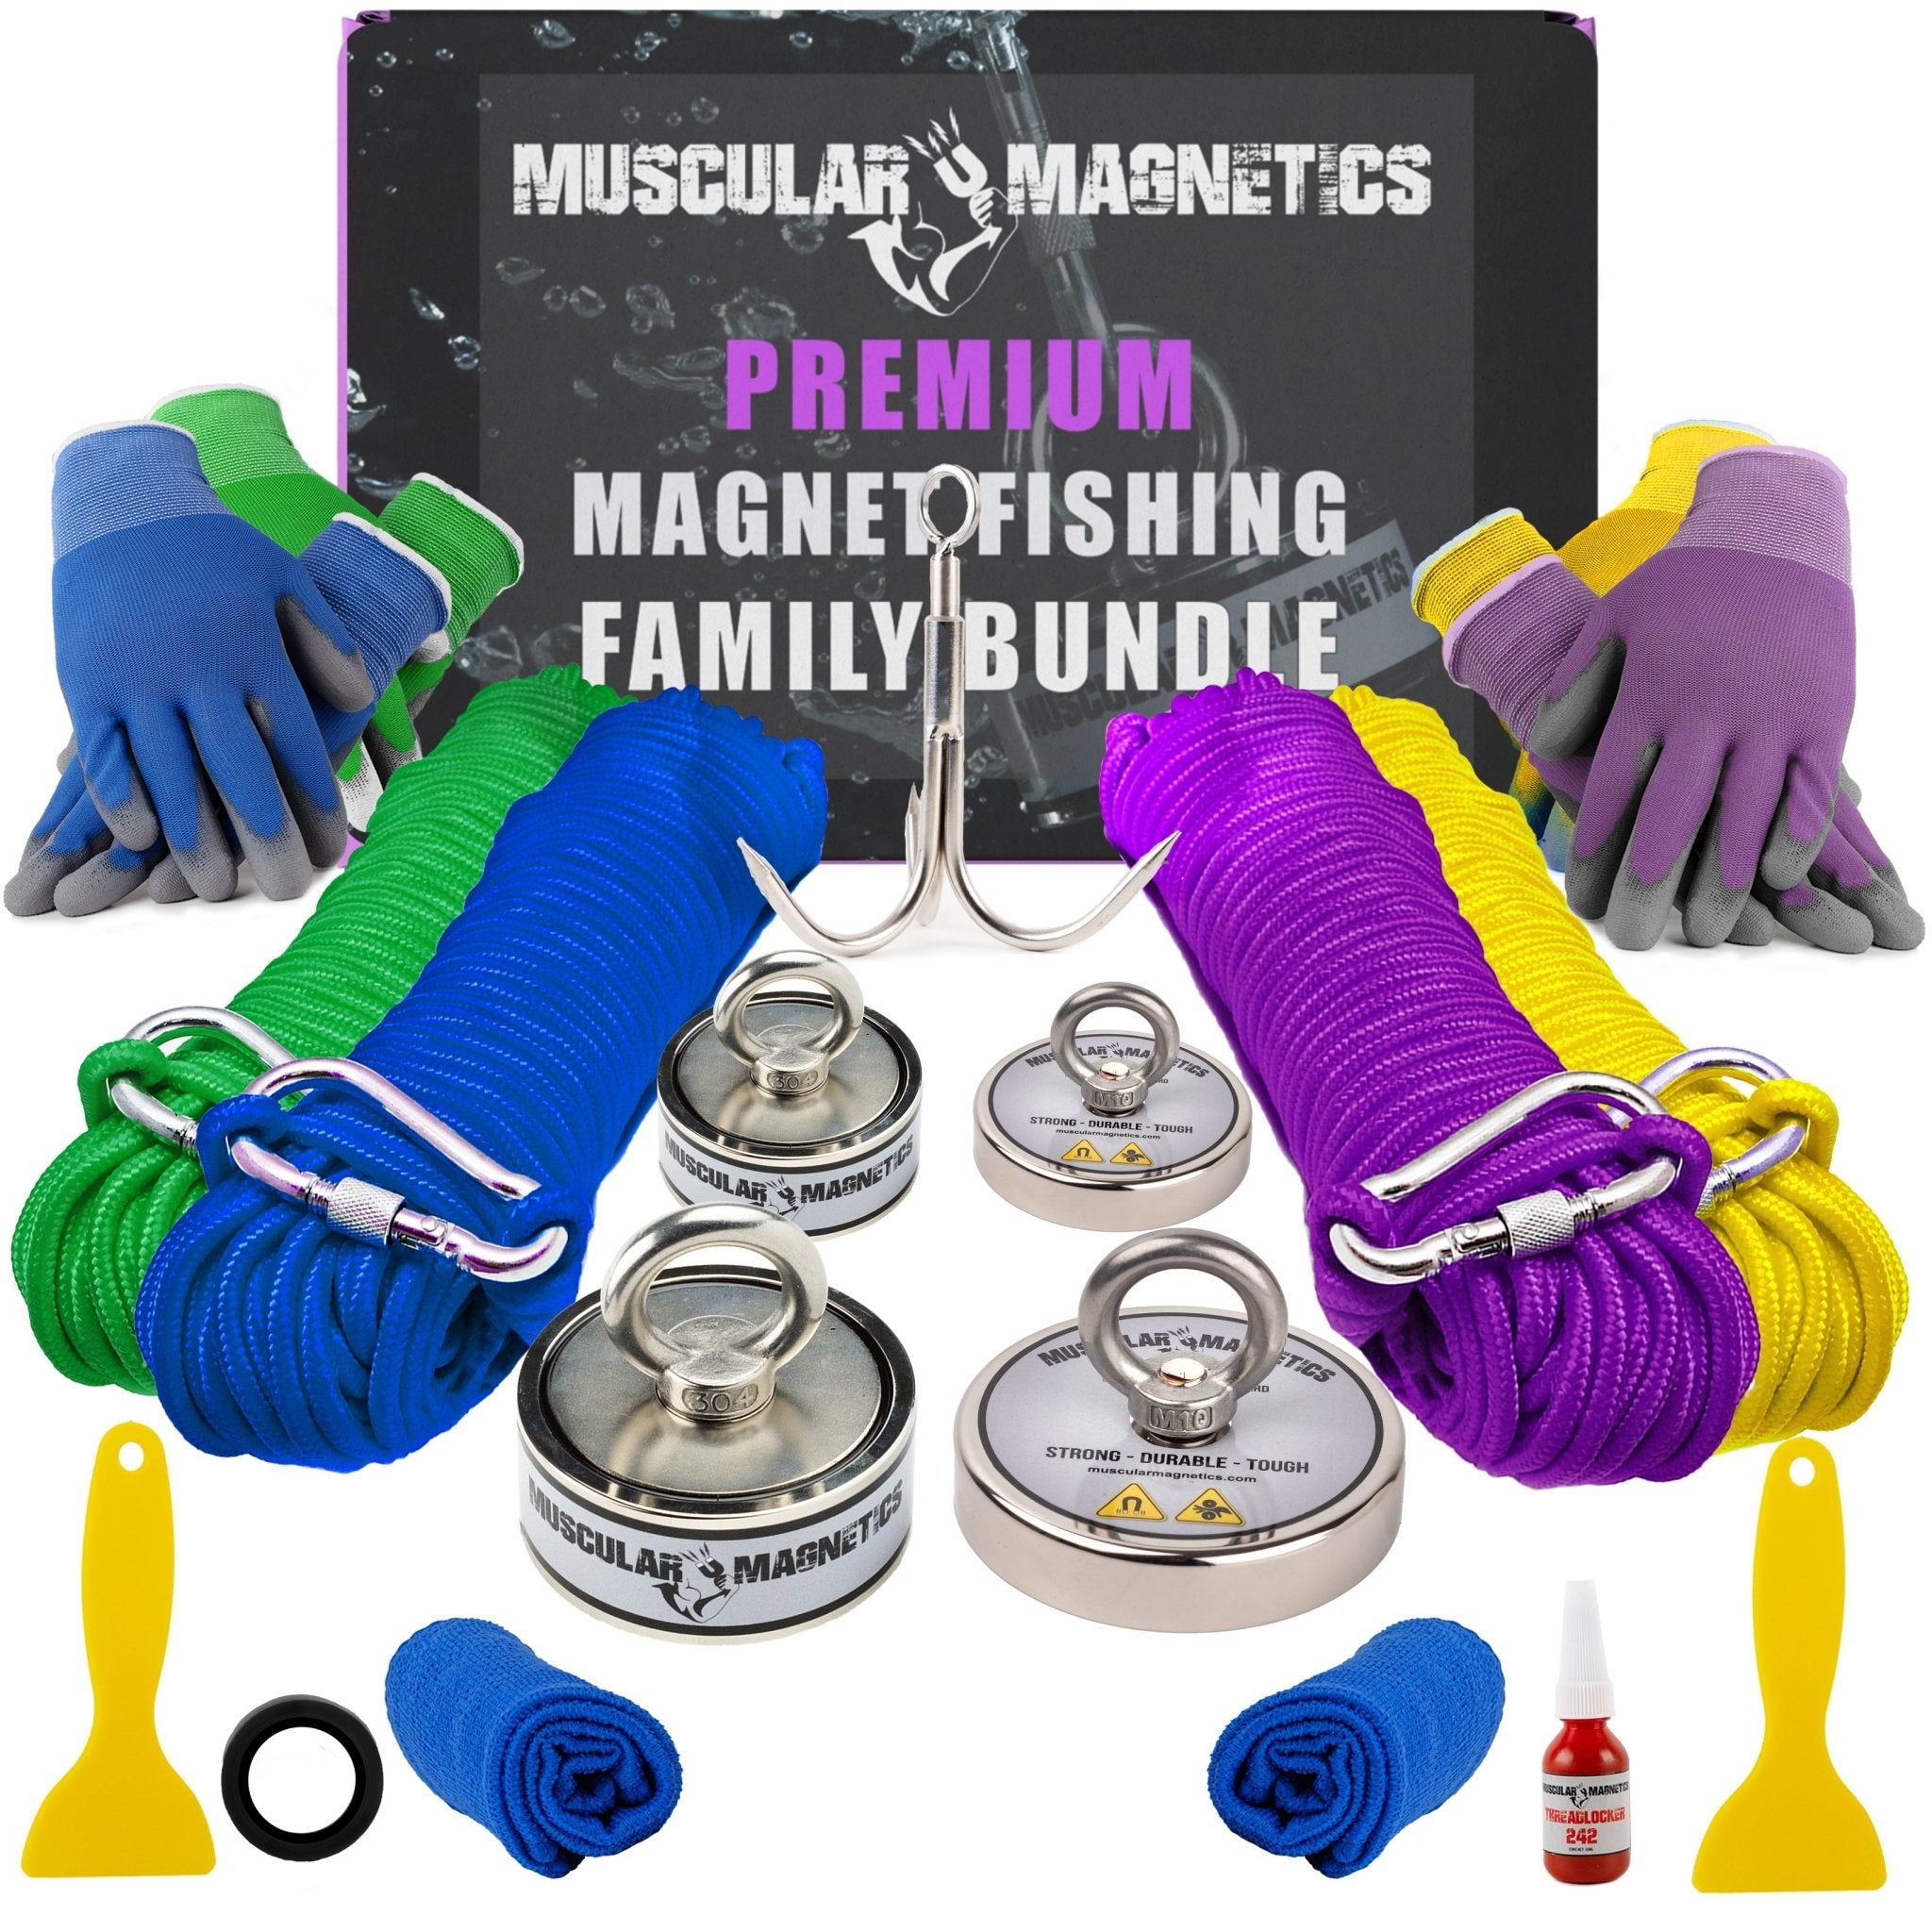 The Ultimate Magnet Fishing Family Kit